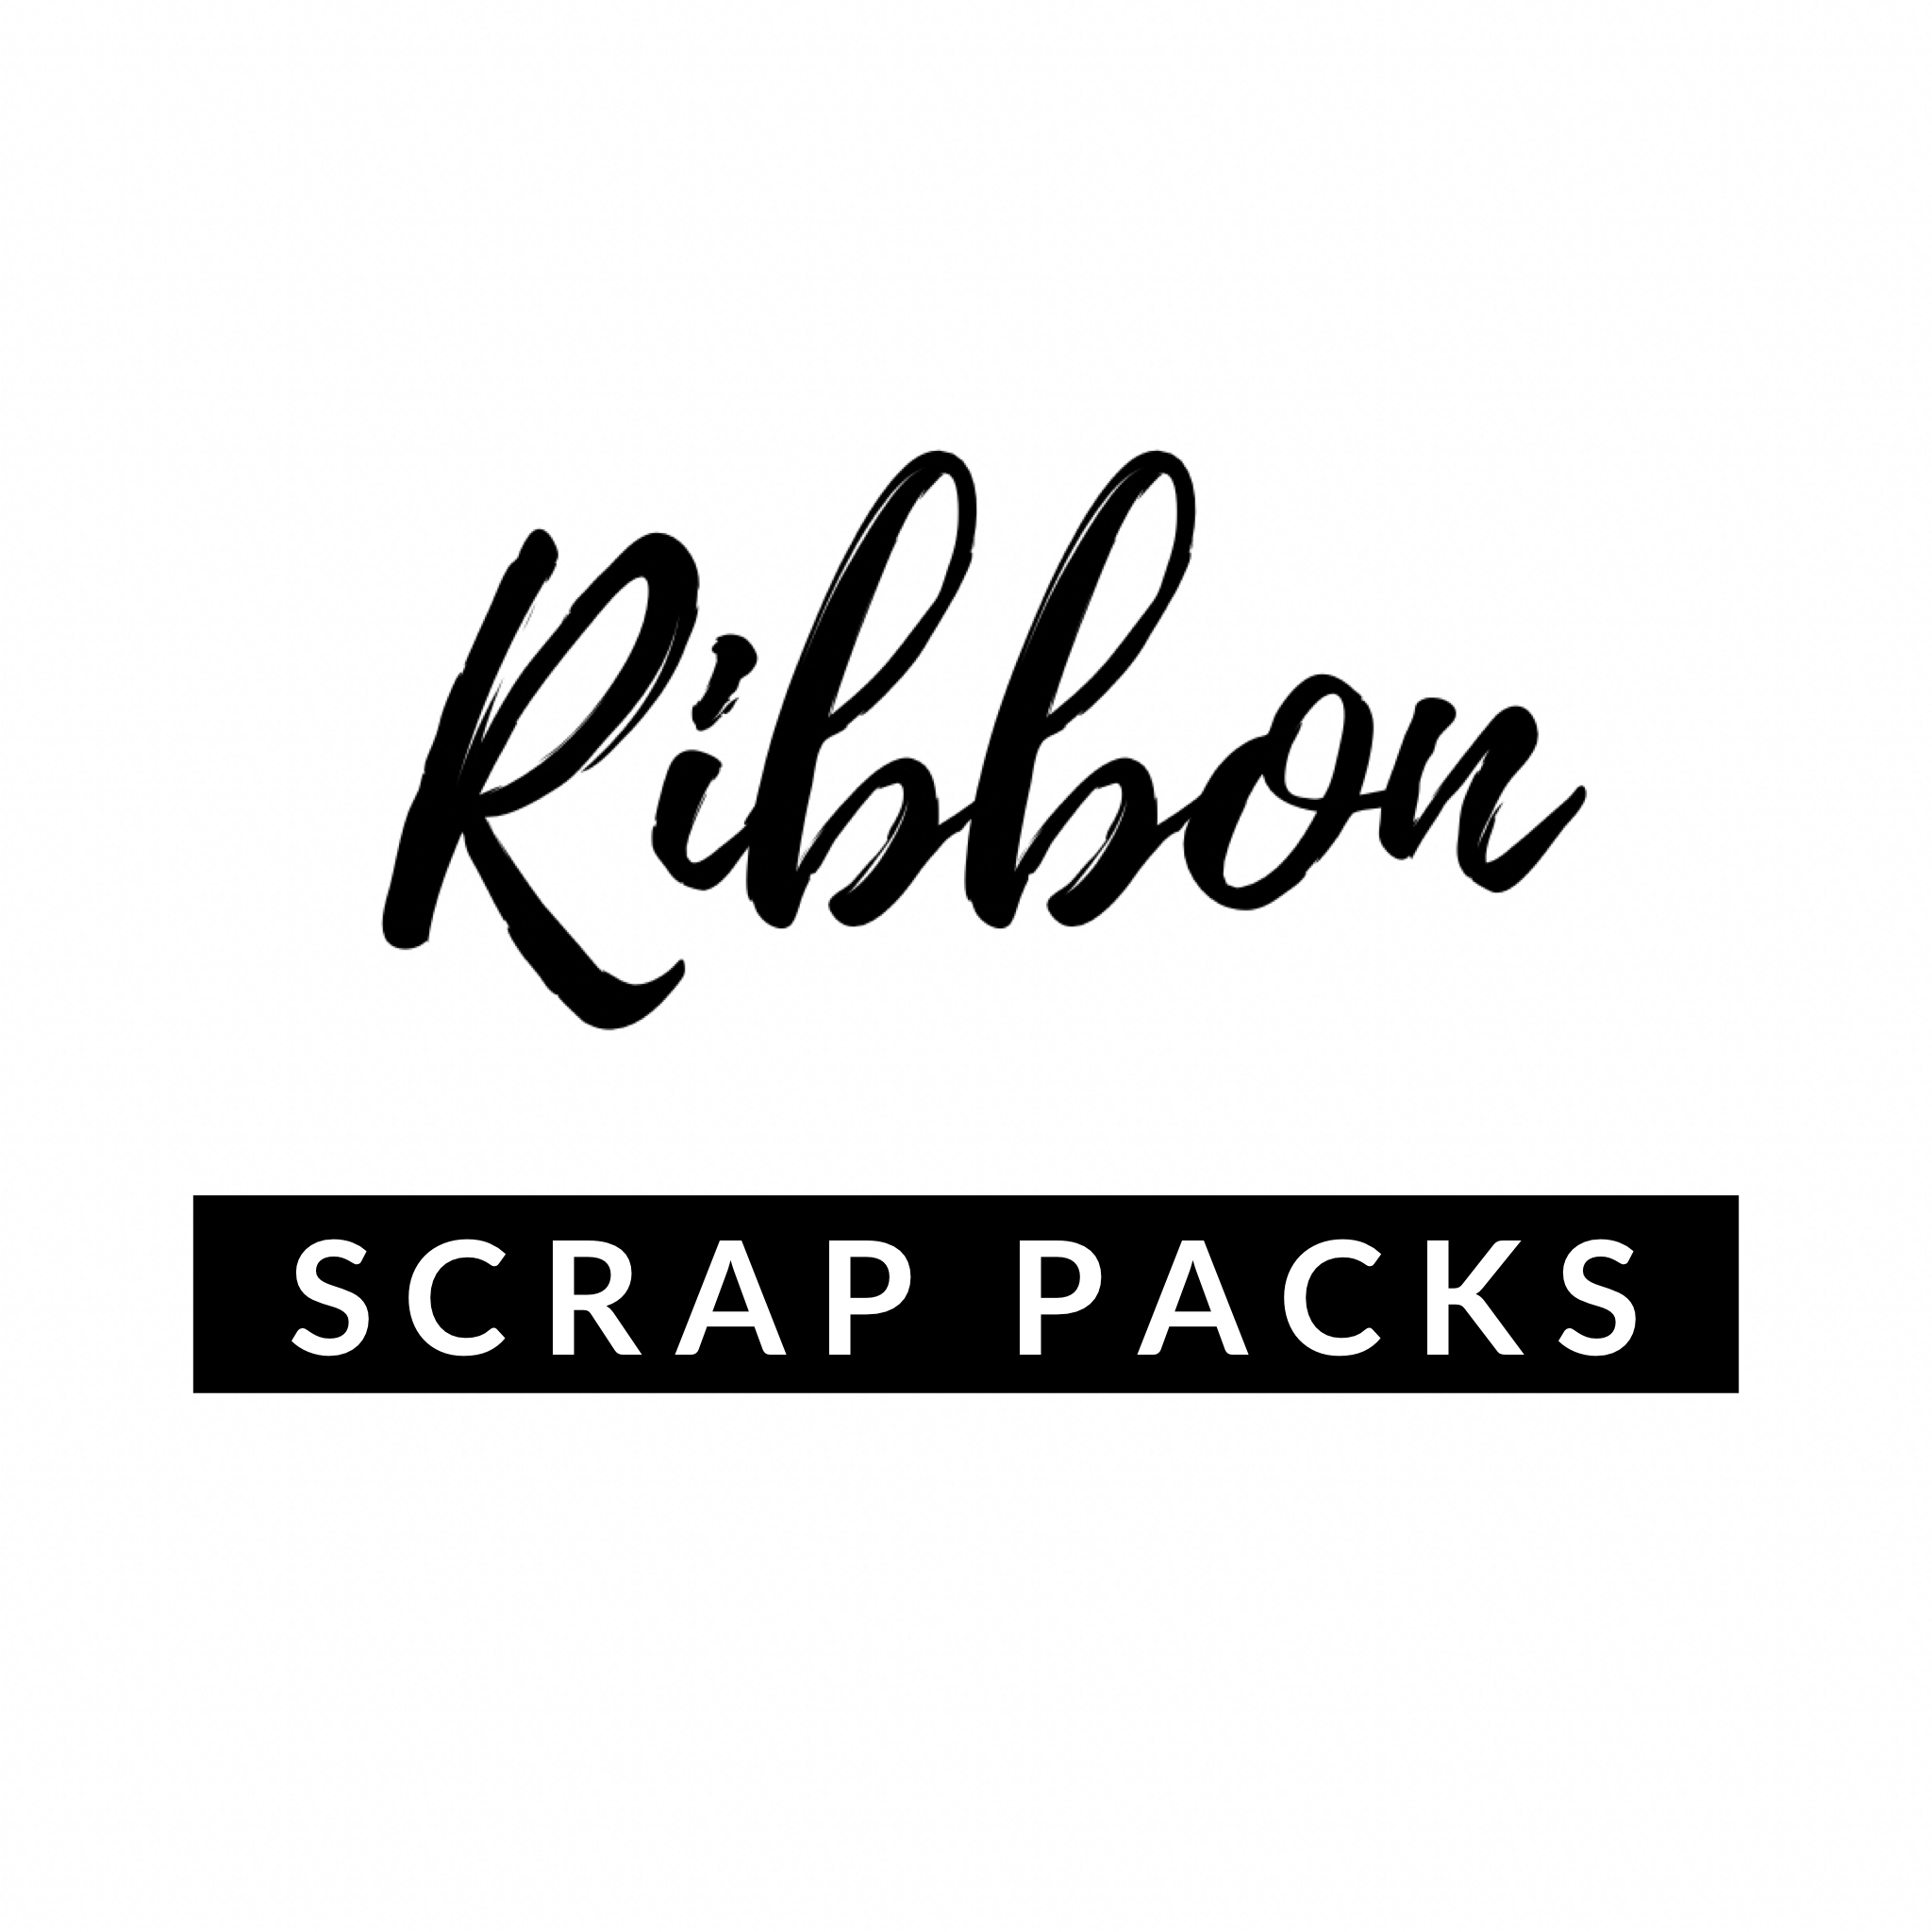 Mixed Ribbon Scrap Packs 300g